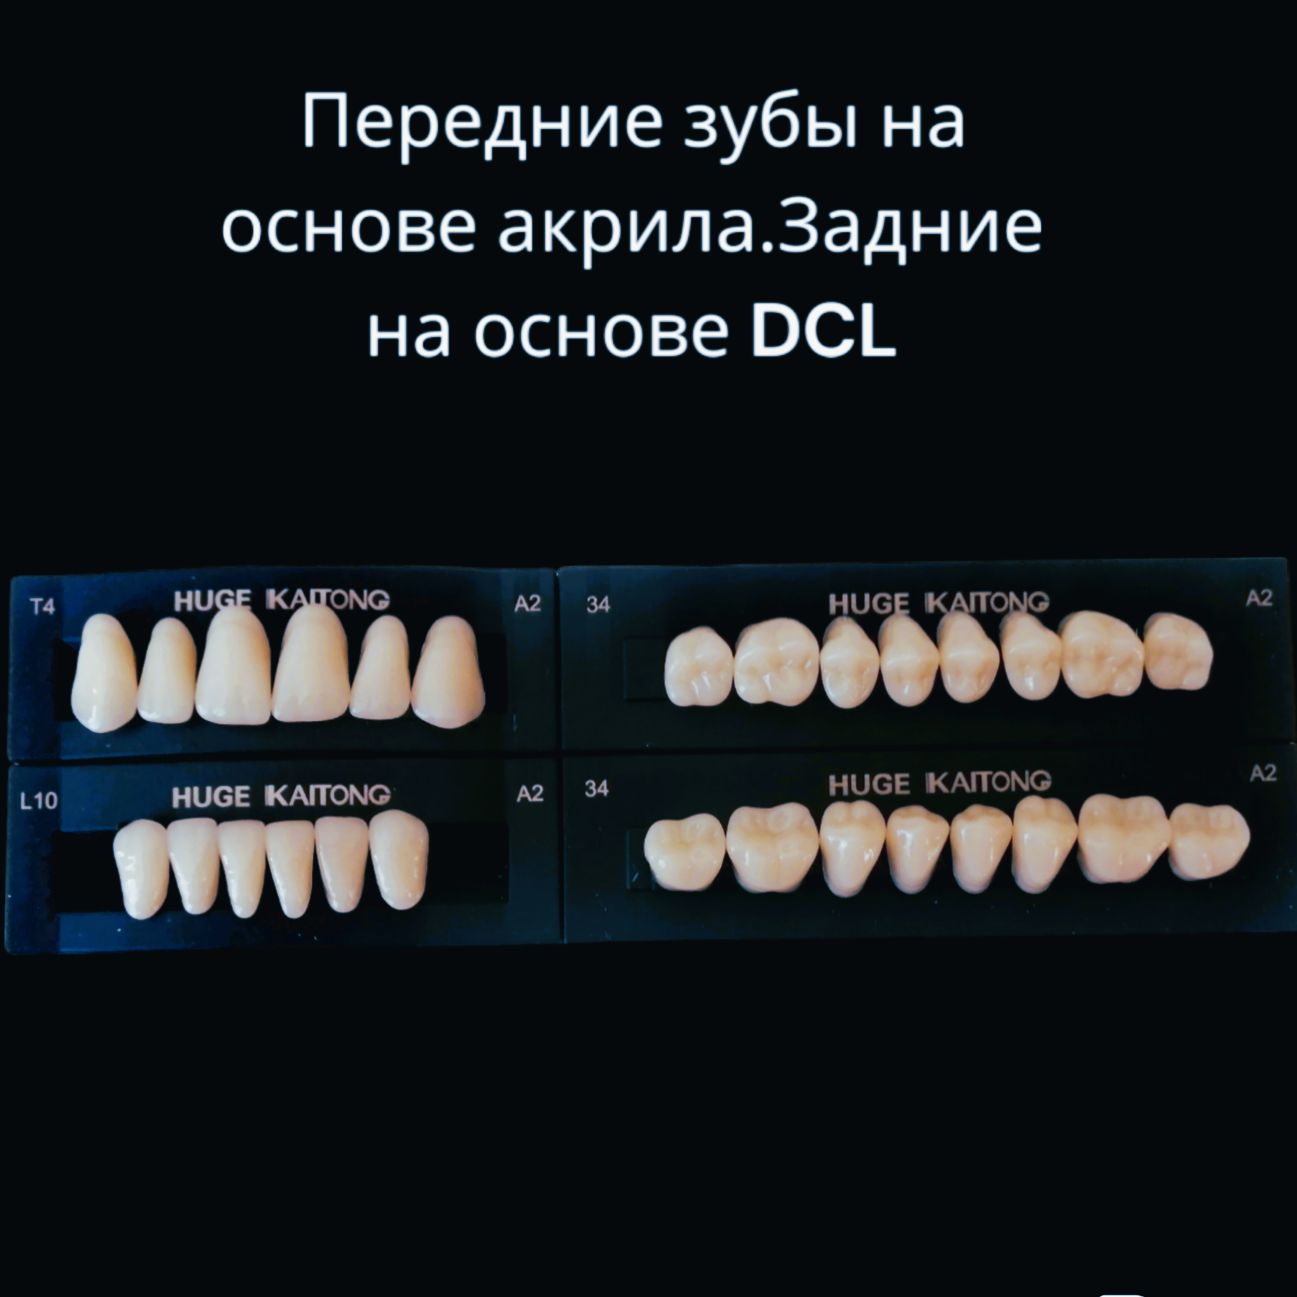 Зубыакриловые2-хслойныеА2Т4Kaitong(1гарнитур,28зубов)HUGEDENTAL